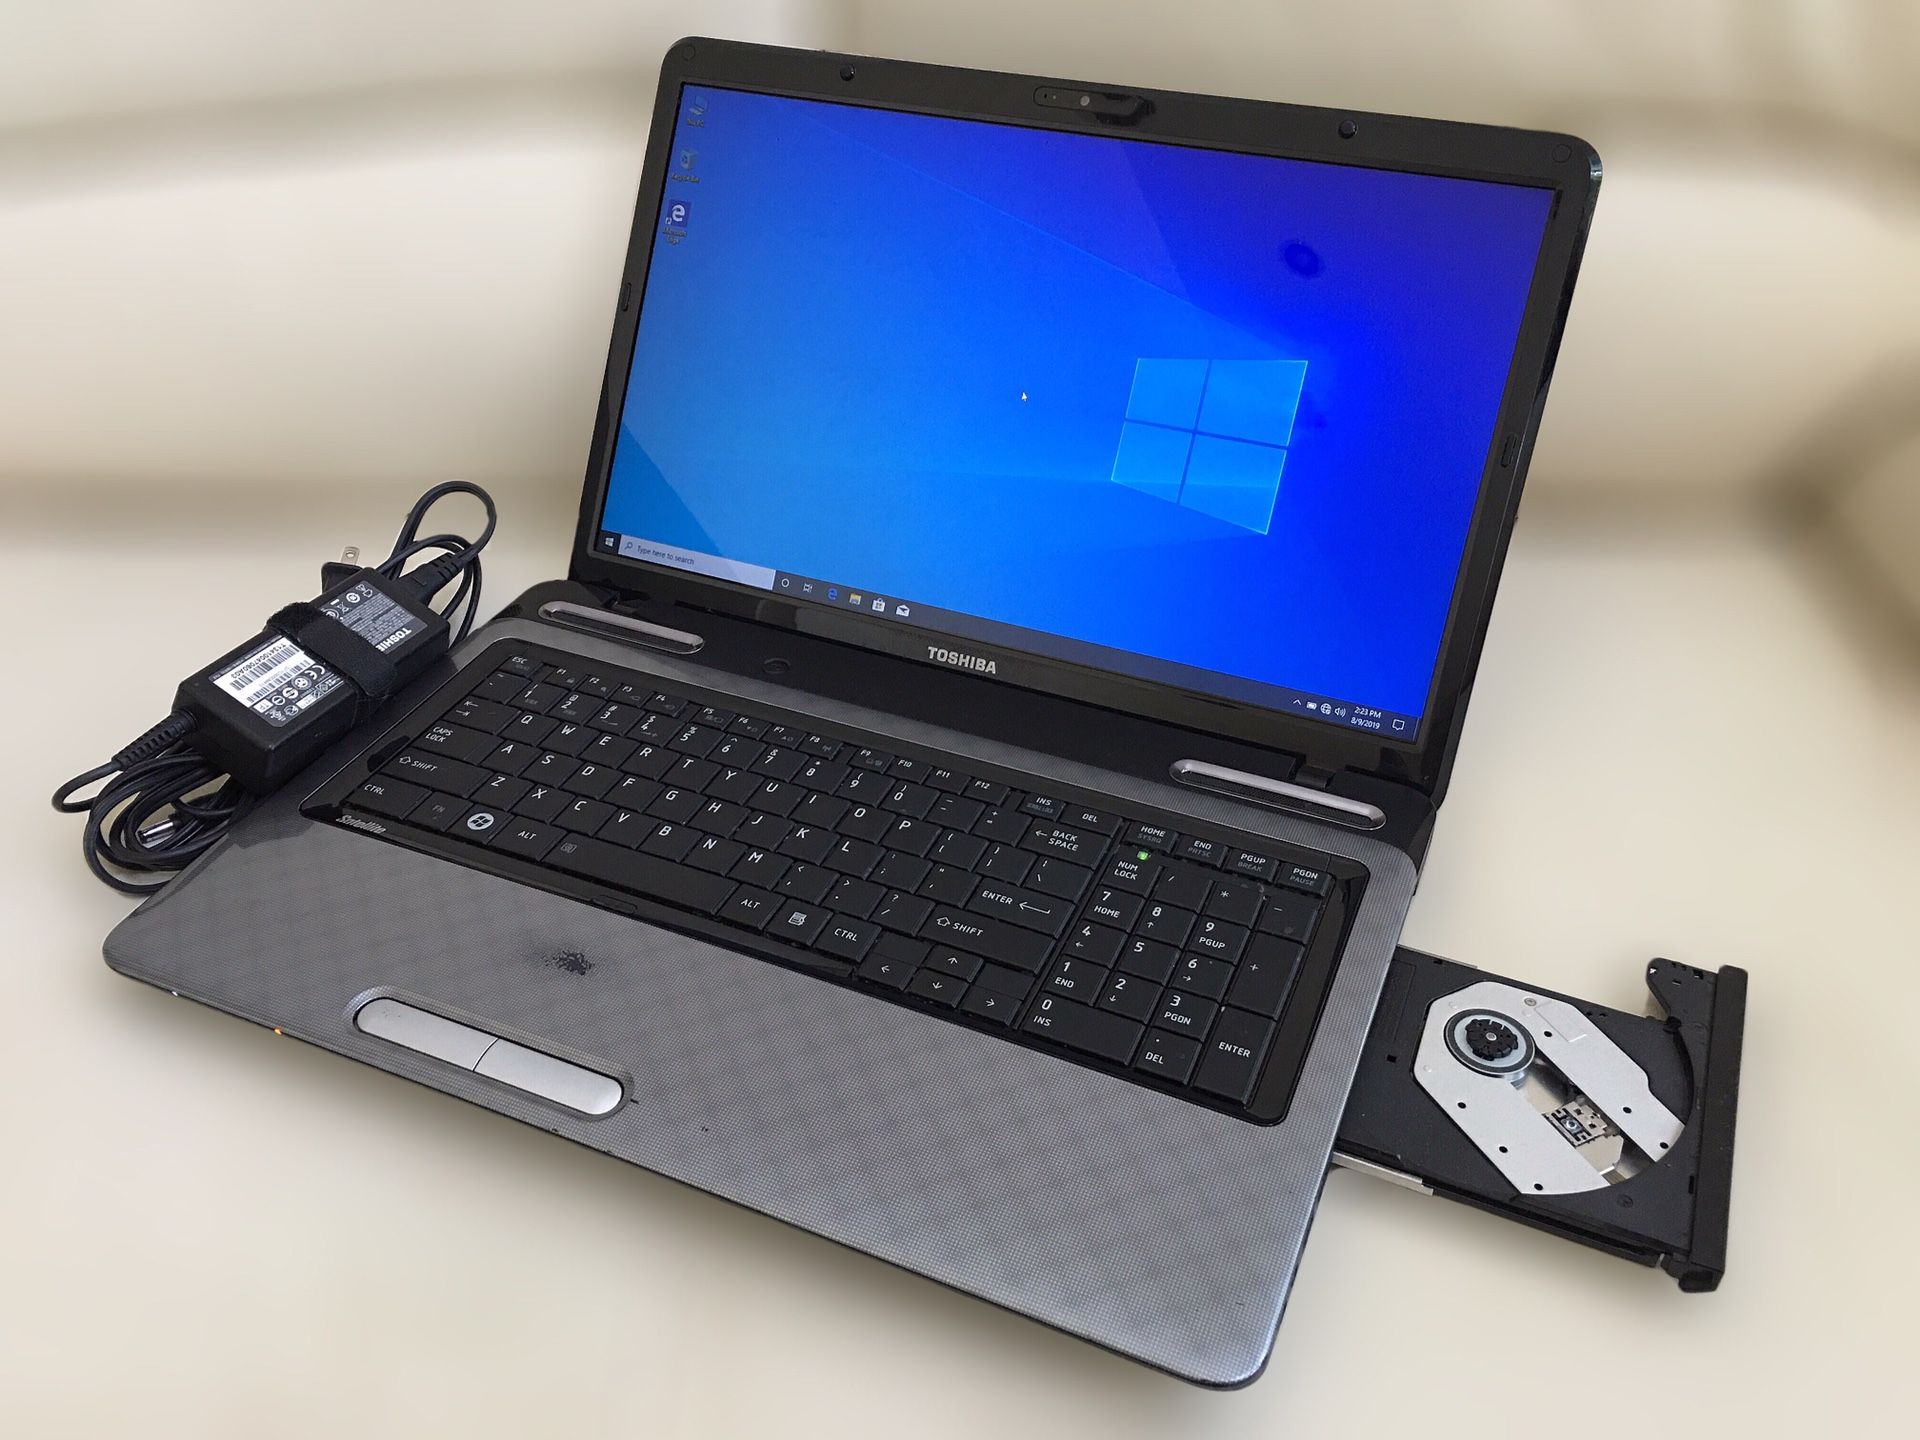 Toshiba 17.3” laptop / Windows 10 / Antivirus / Charger / Case